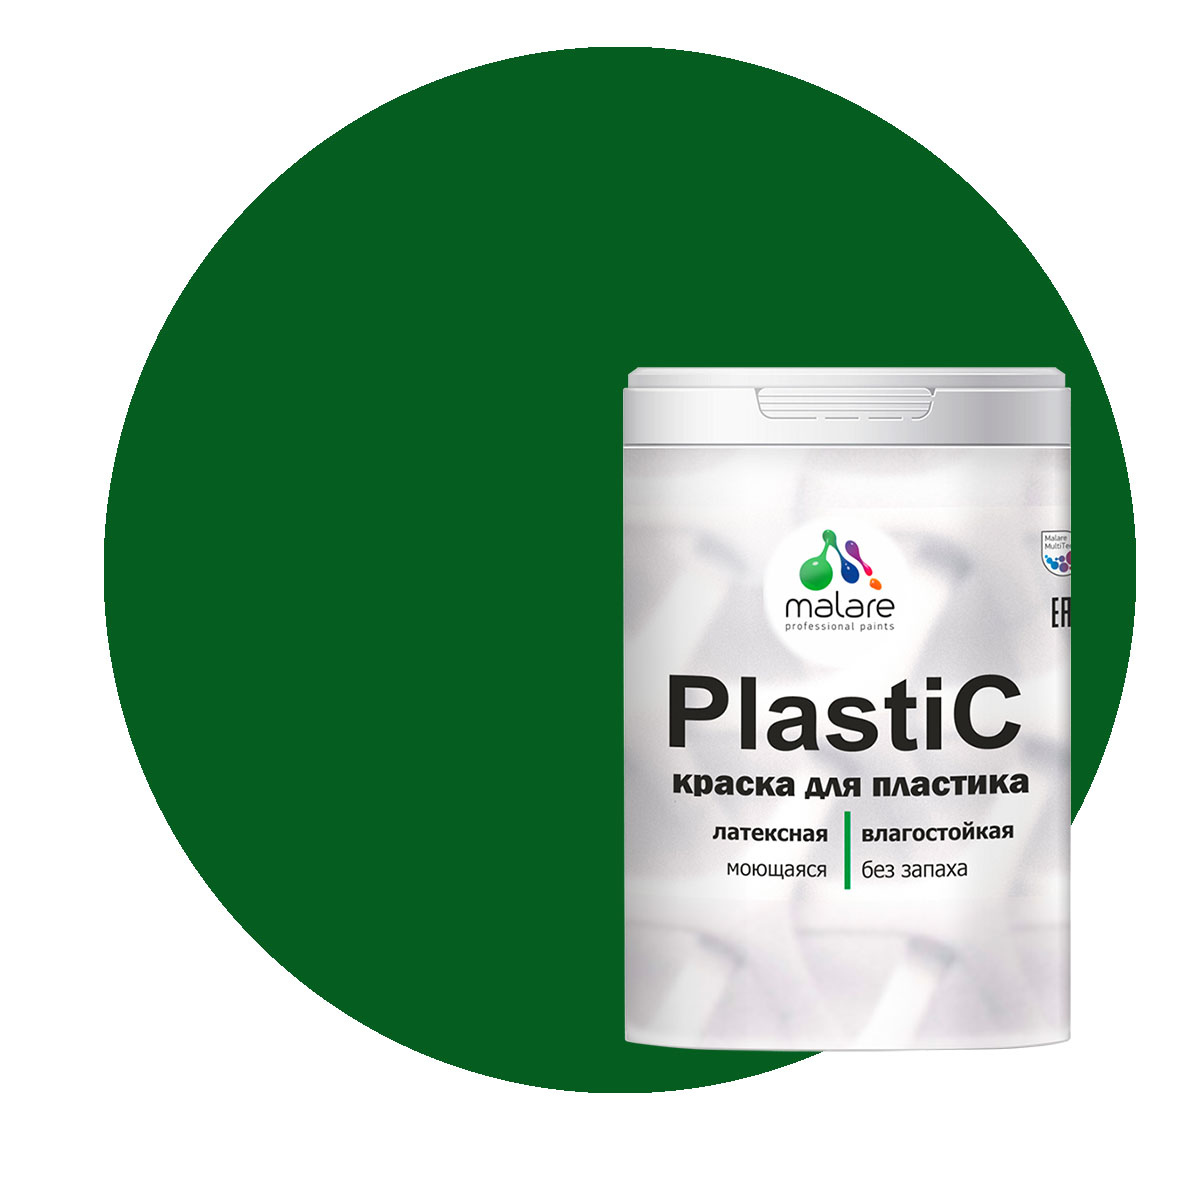 краска malare plastic для пластика пвх для сайдинга летний бриз 1 кг Краска Malare PlastiC для пластика, ПВХ, для сайдинга, зеленый мичиган, 2 кг.